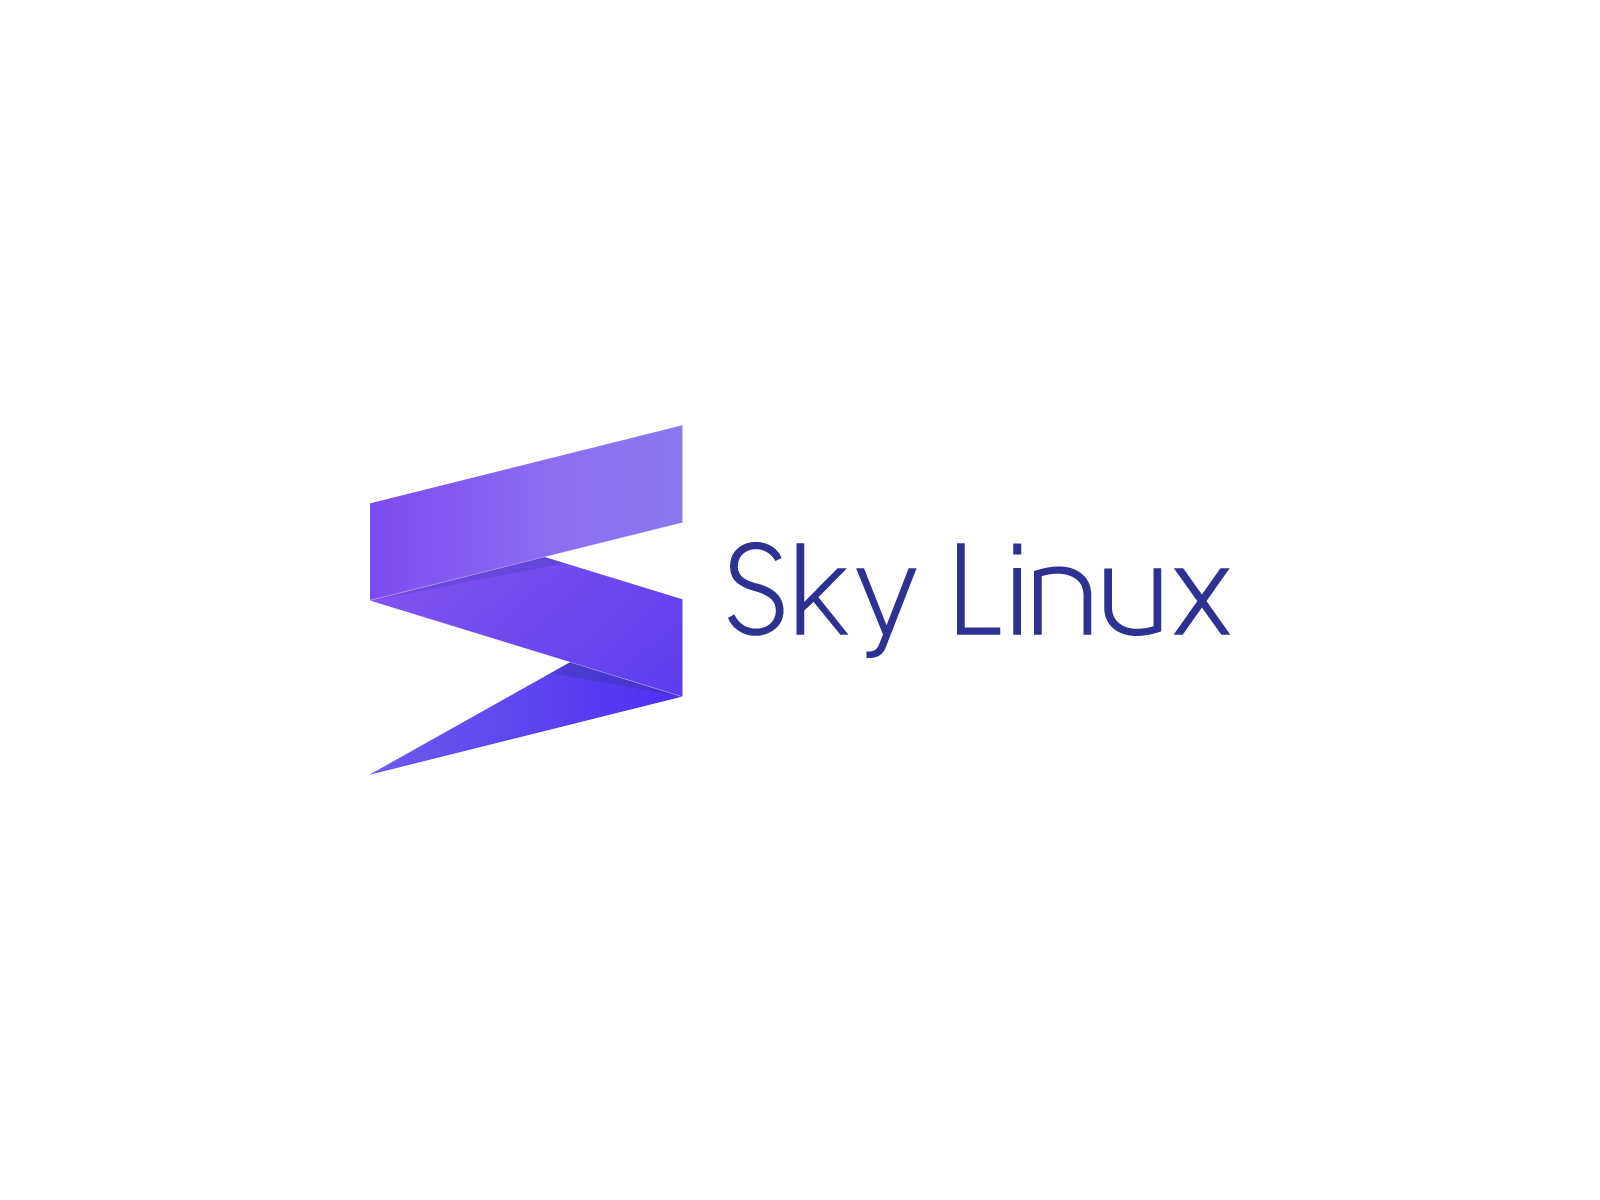 Sky Linux@2x